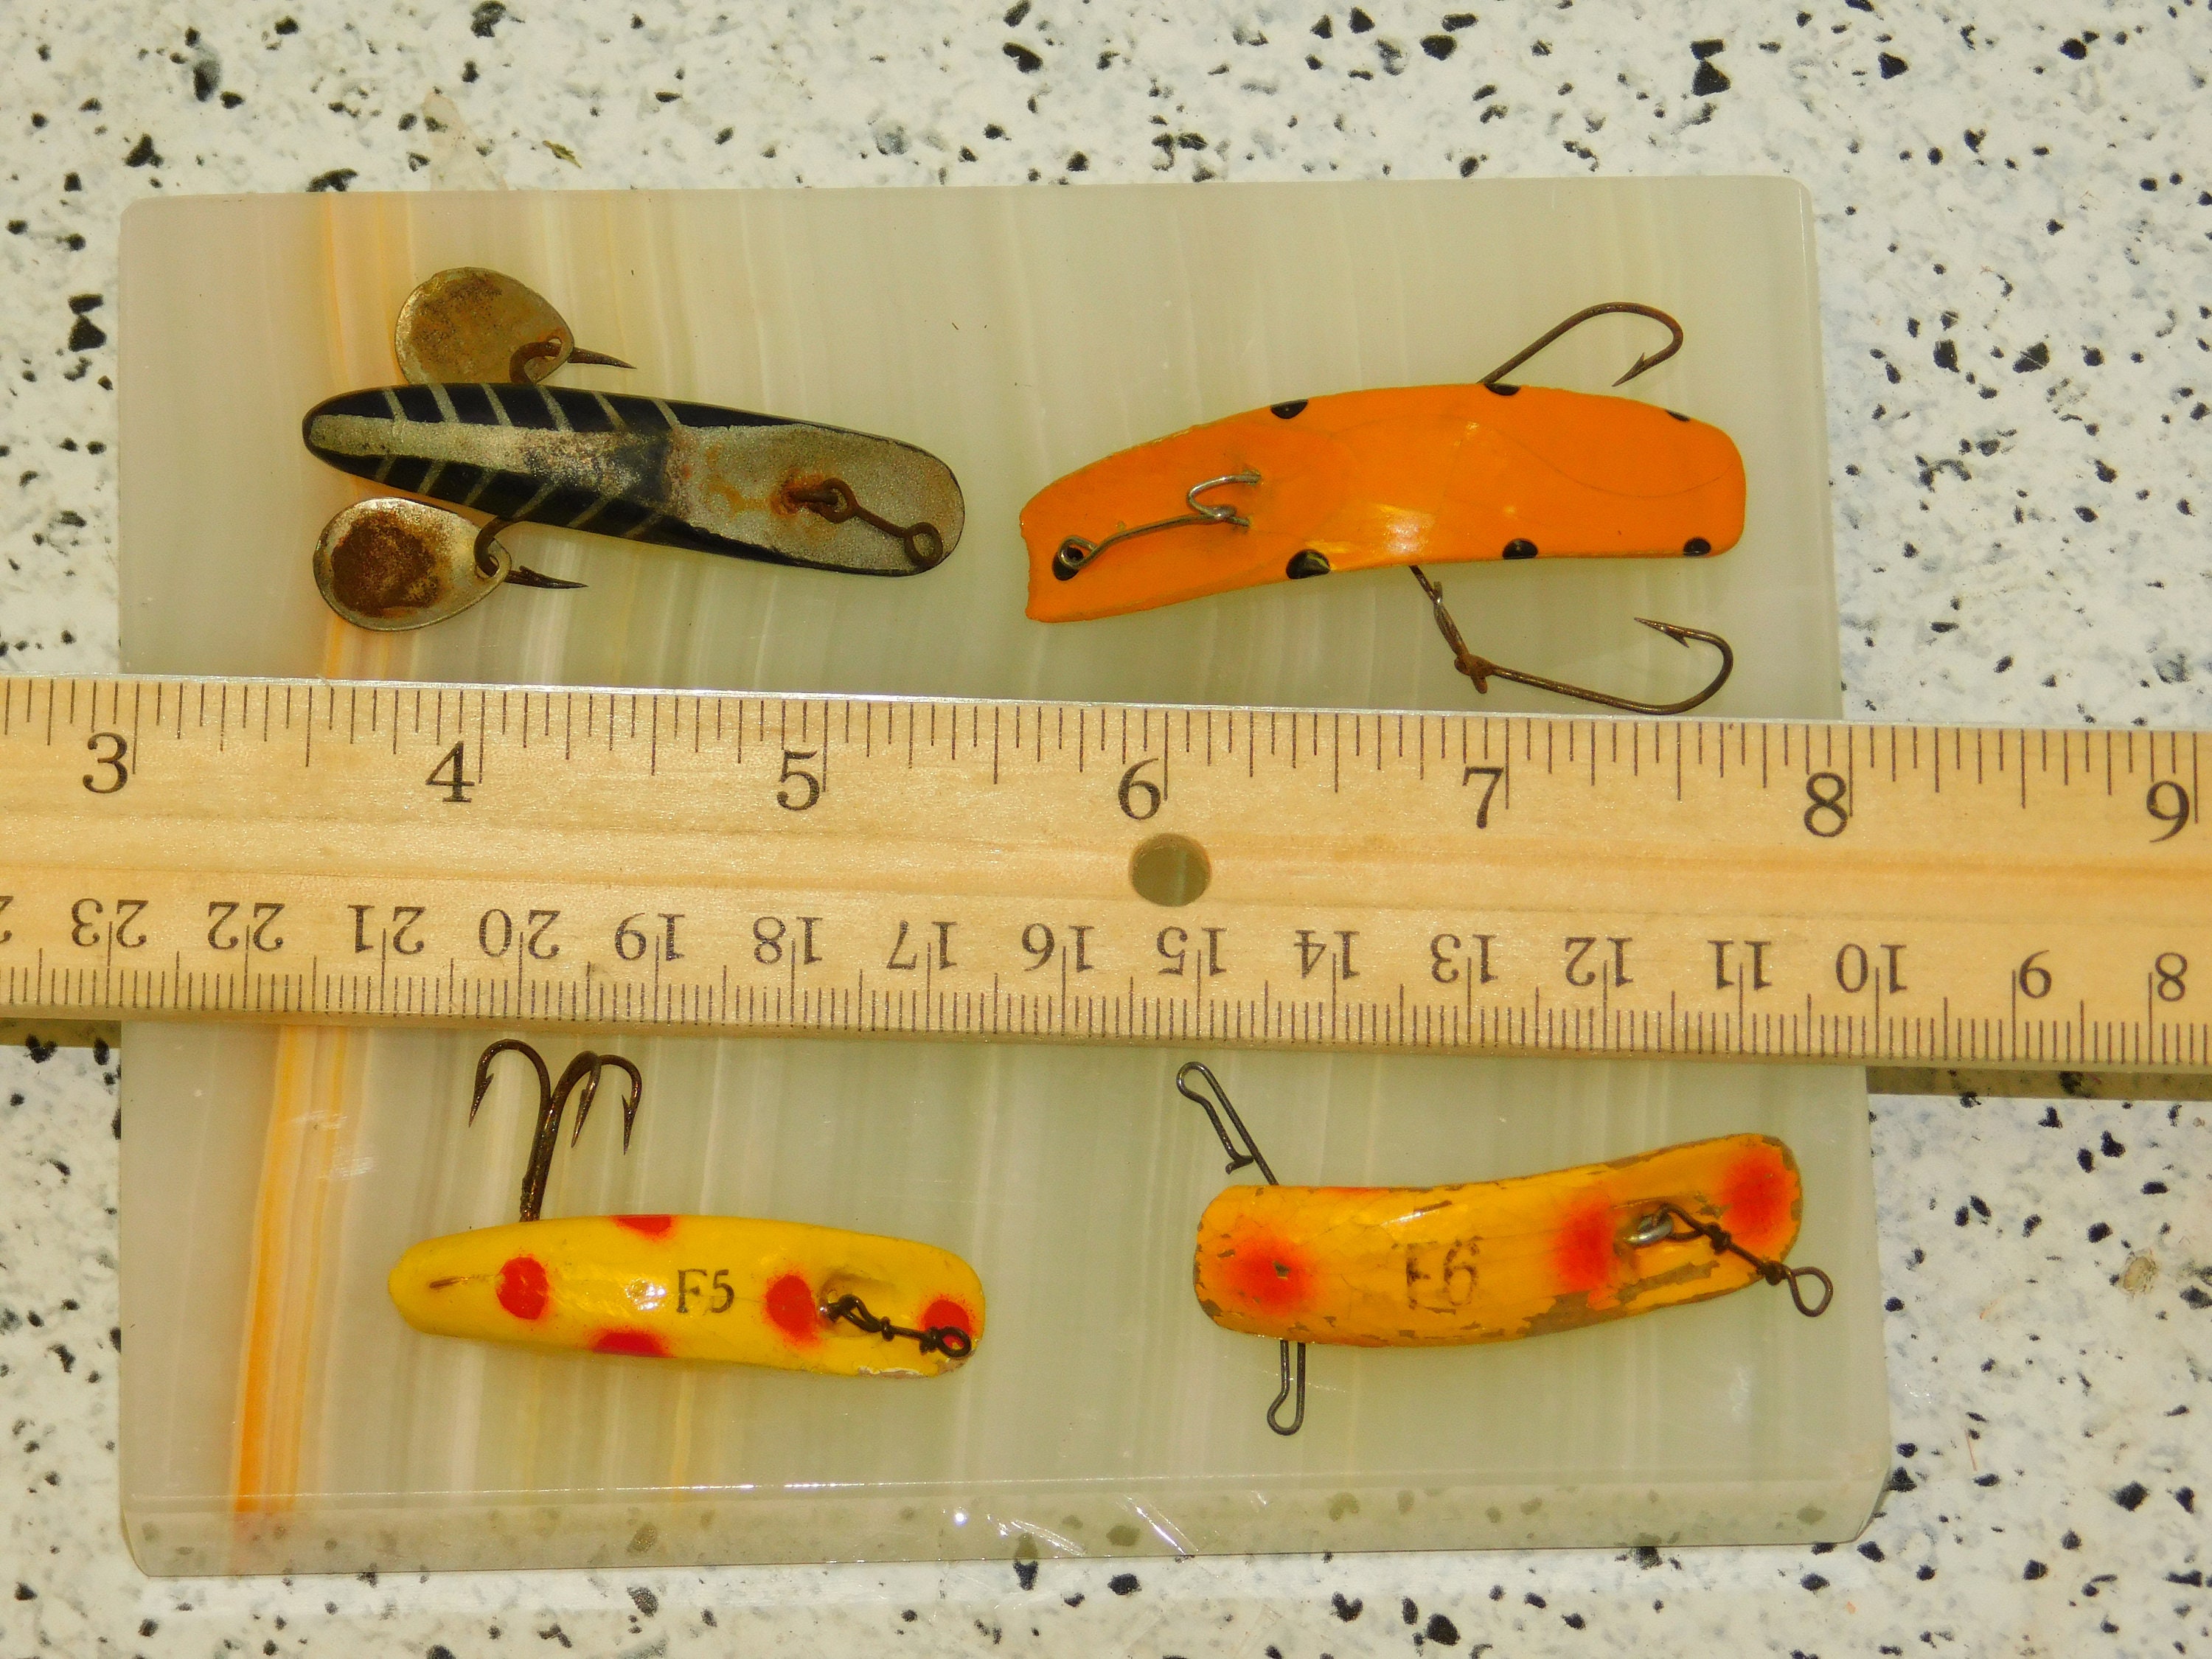 Vintage Helin S3 Flatfish Fishing Lure with Box  Fishing lures, Fishing  bobber, Vintage fishing lures